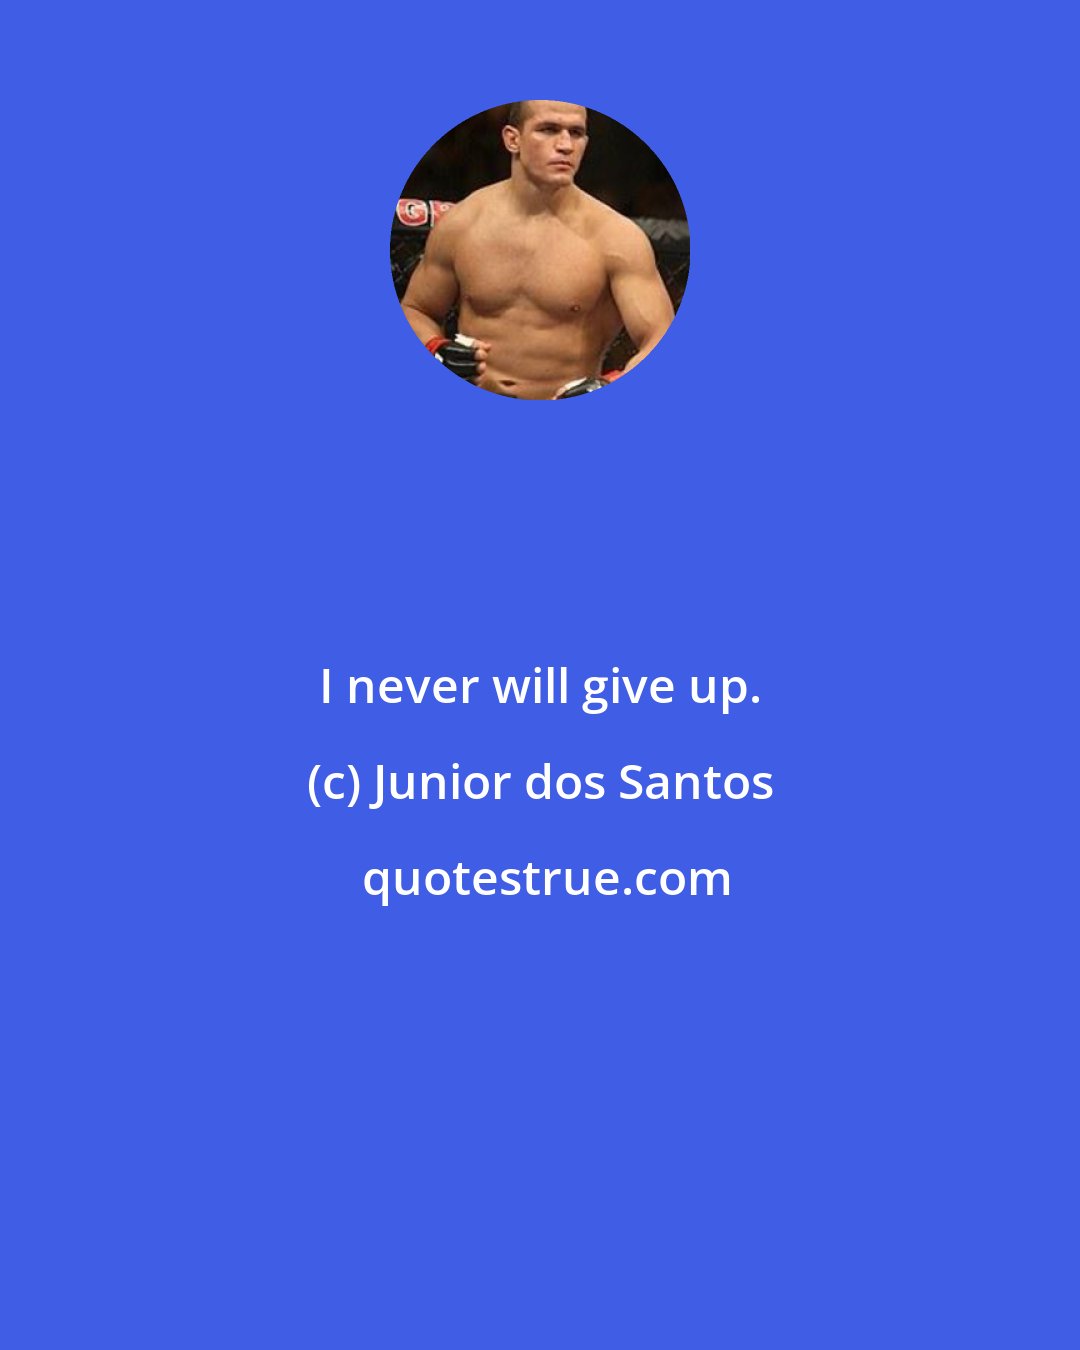 Junior dos Santos: I never will give up.